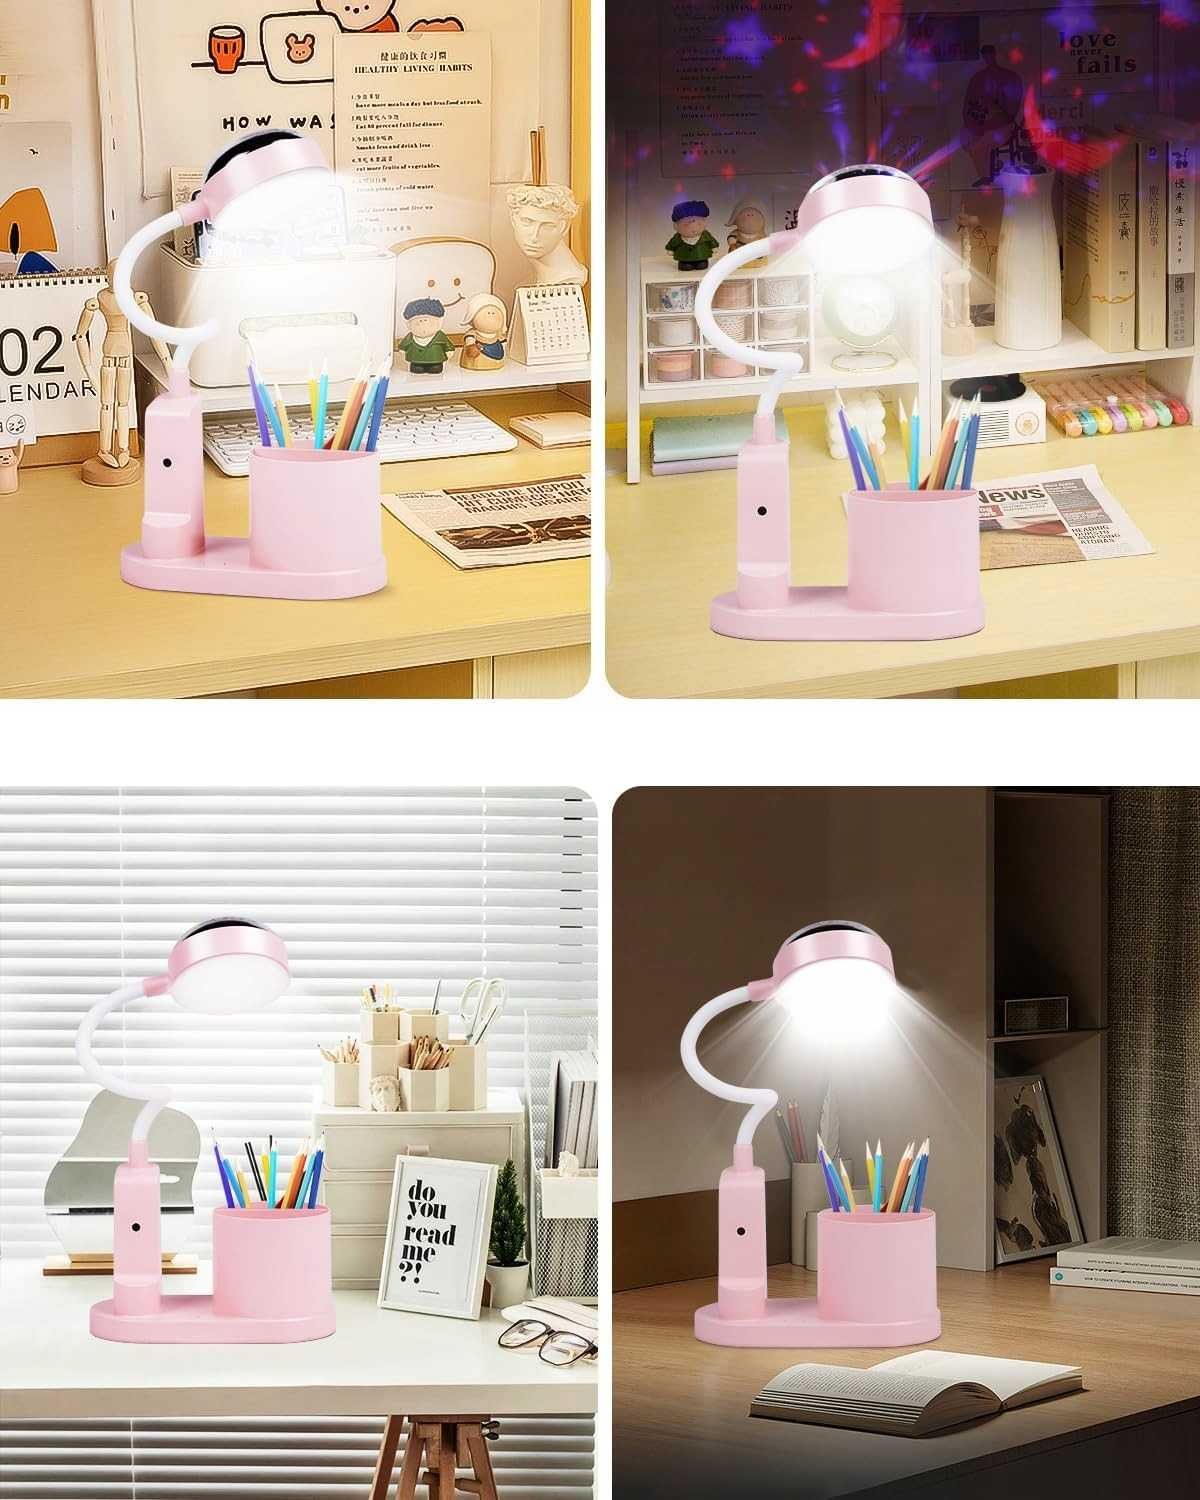 5l182. TechKen Lampa biurkowa dla dzieci, lampka nocna LED, biały